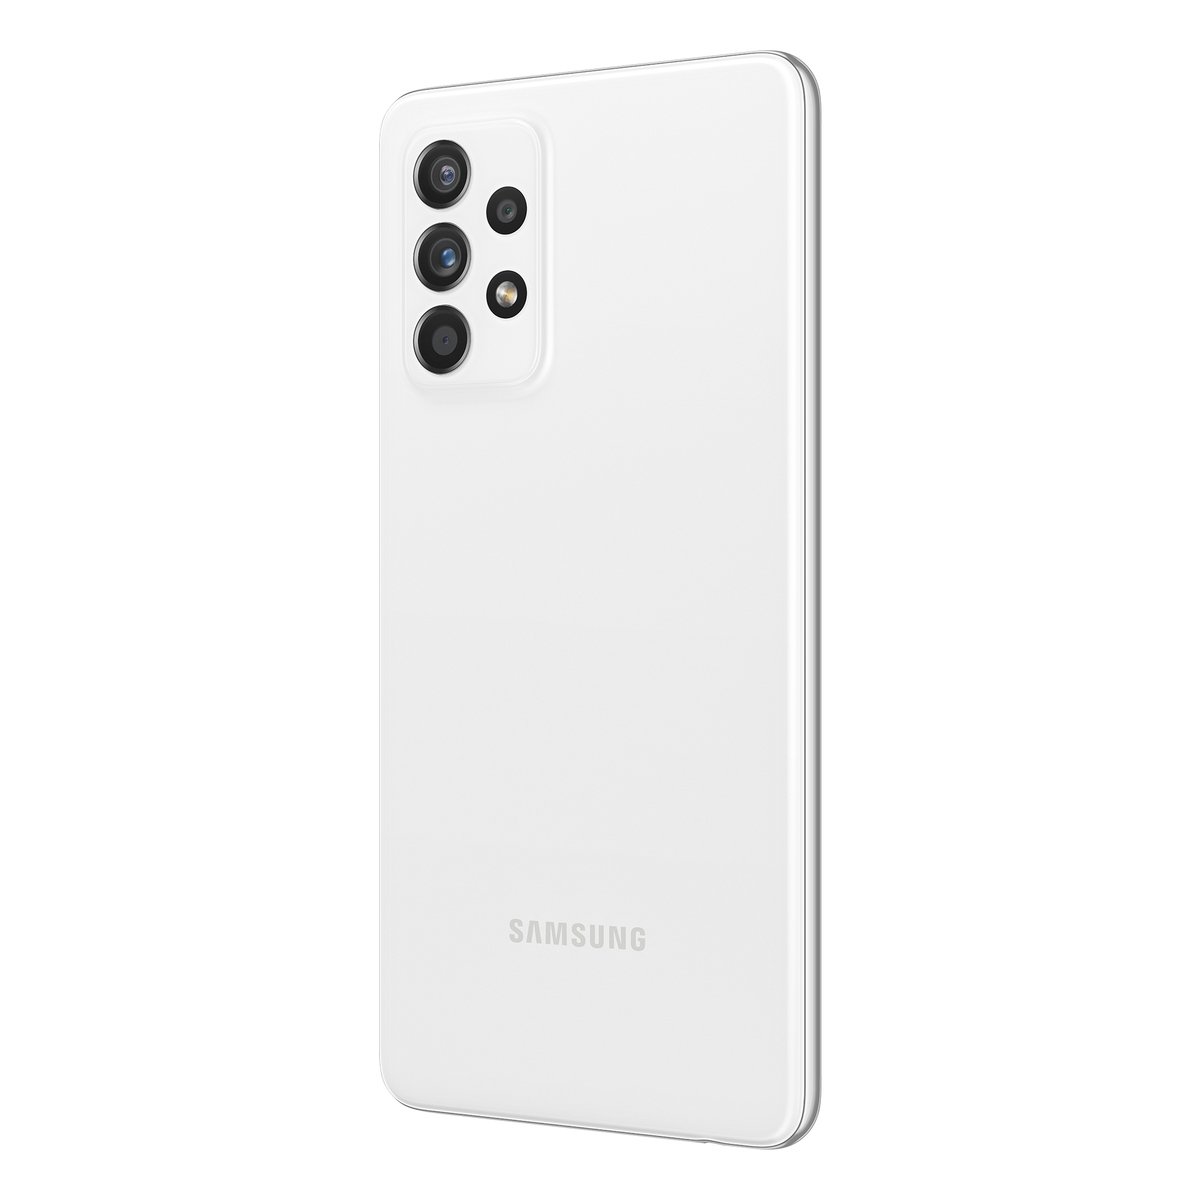 Samsung Galaxy A52-SMA526 128GB 5G White